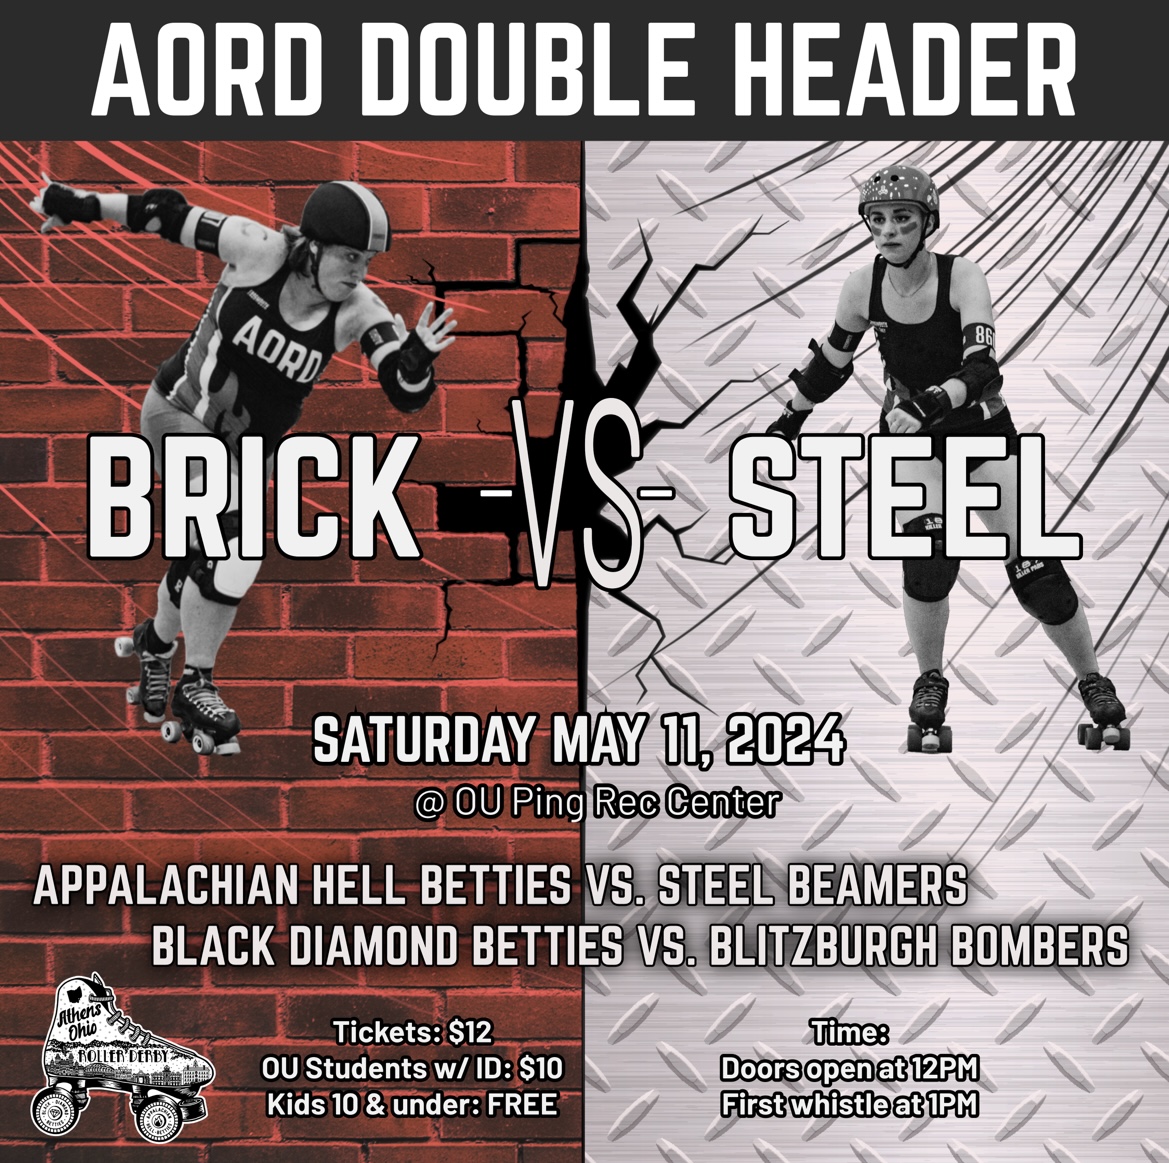 A flyer for the Bricks vs. Steel roller derby game.